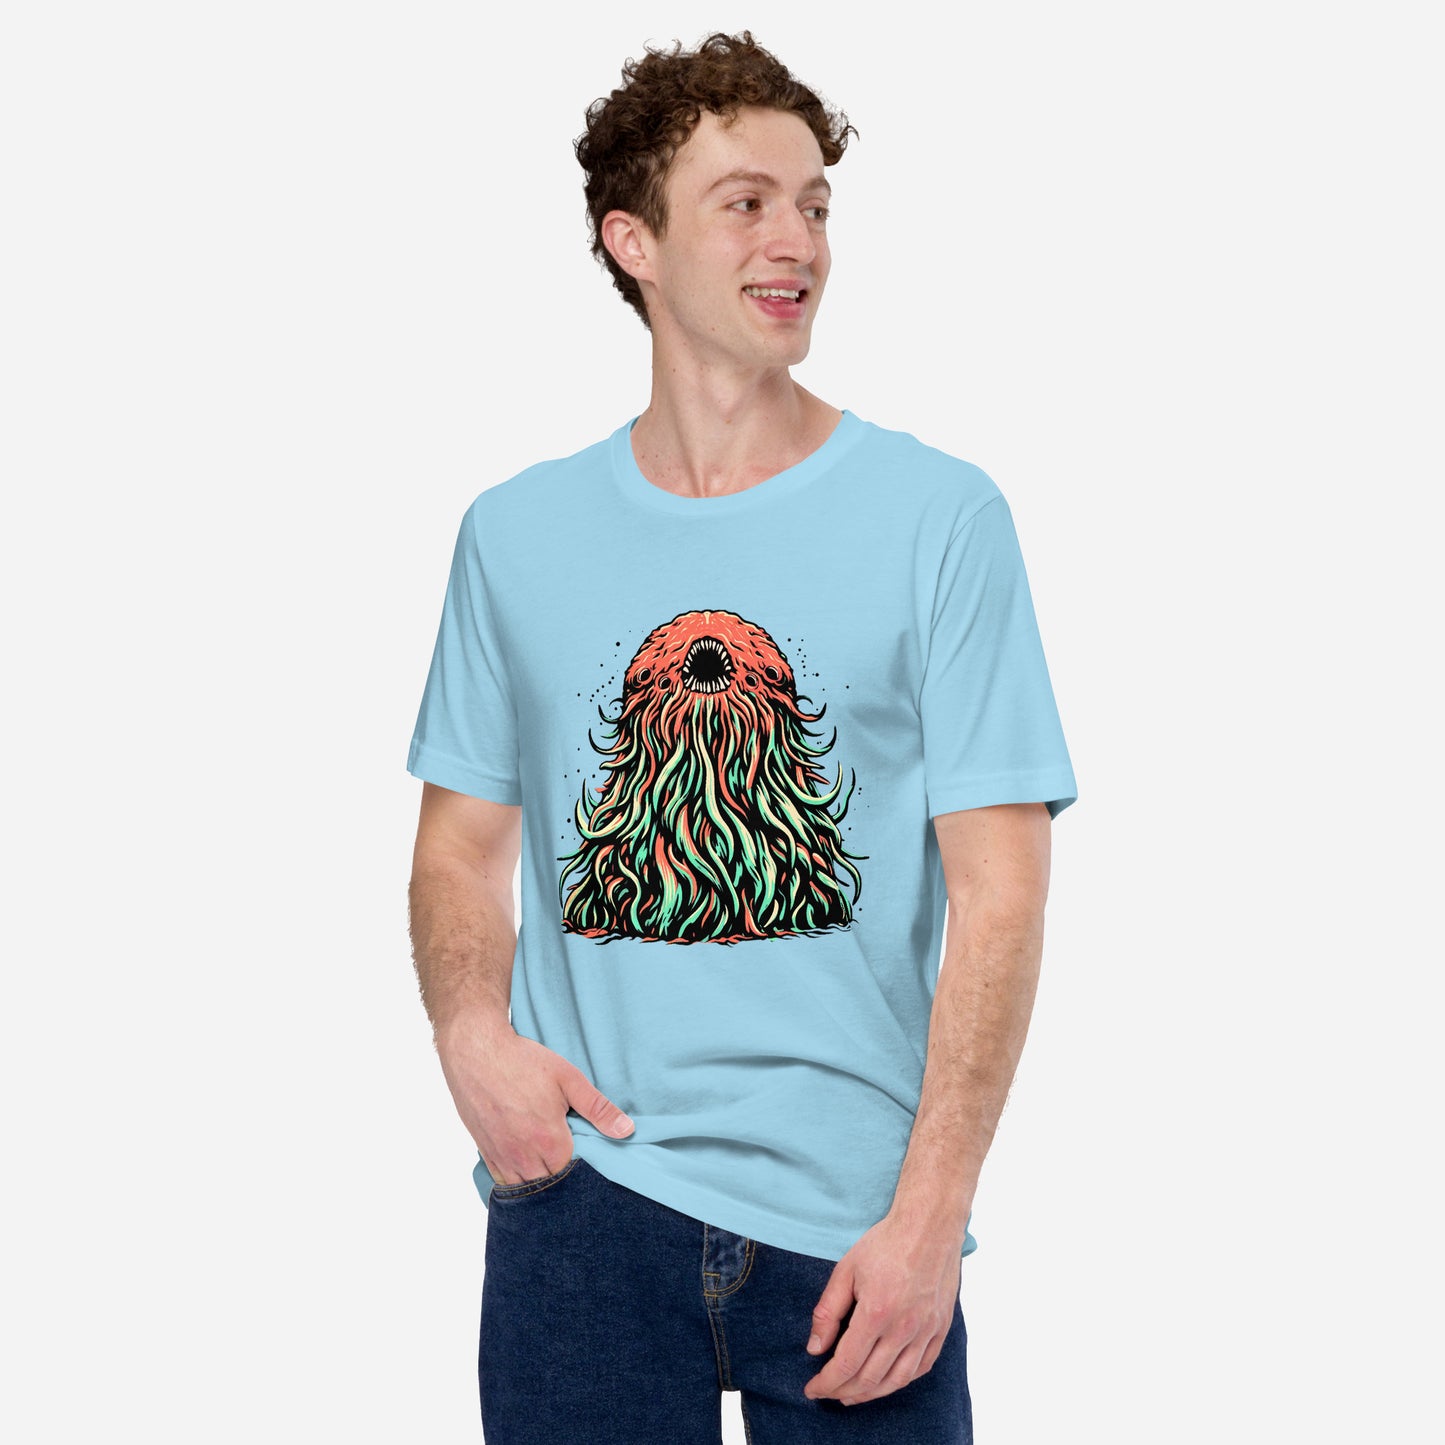 "myceliath" unisex t-shirt